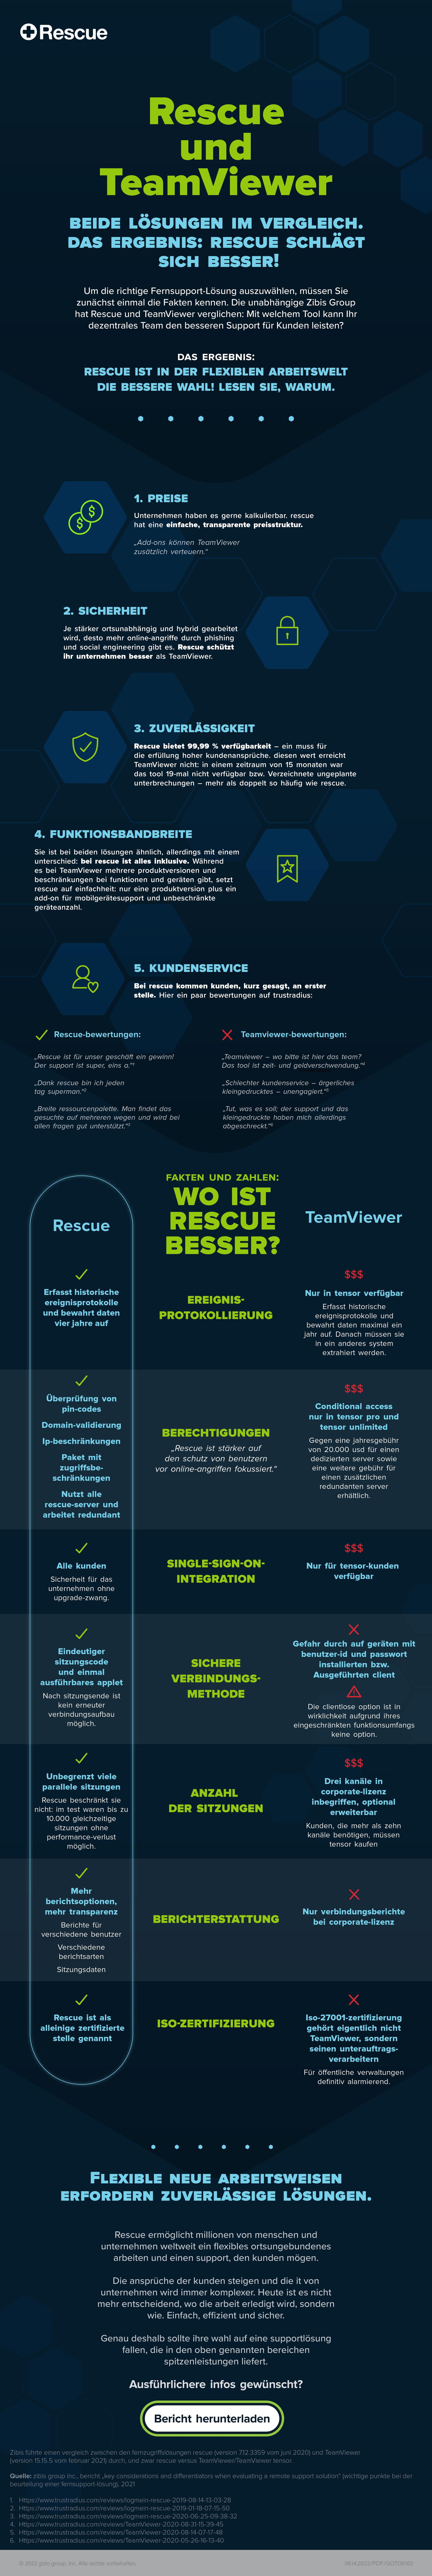 LogMeIn Rescue vs TeamViewer DE